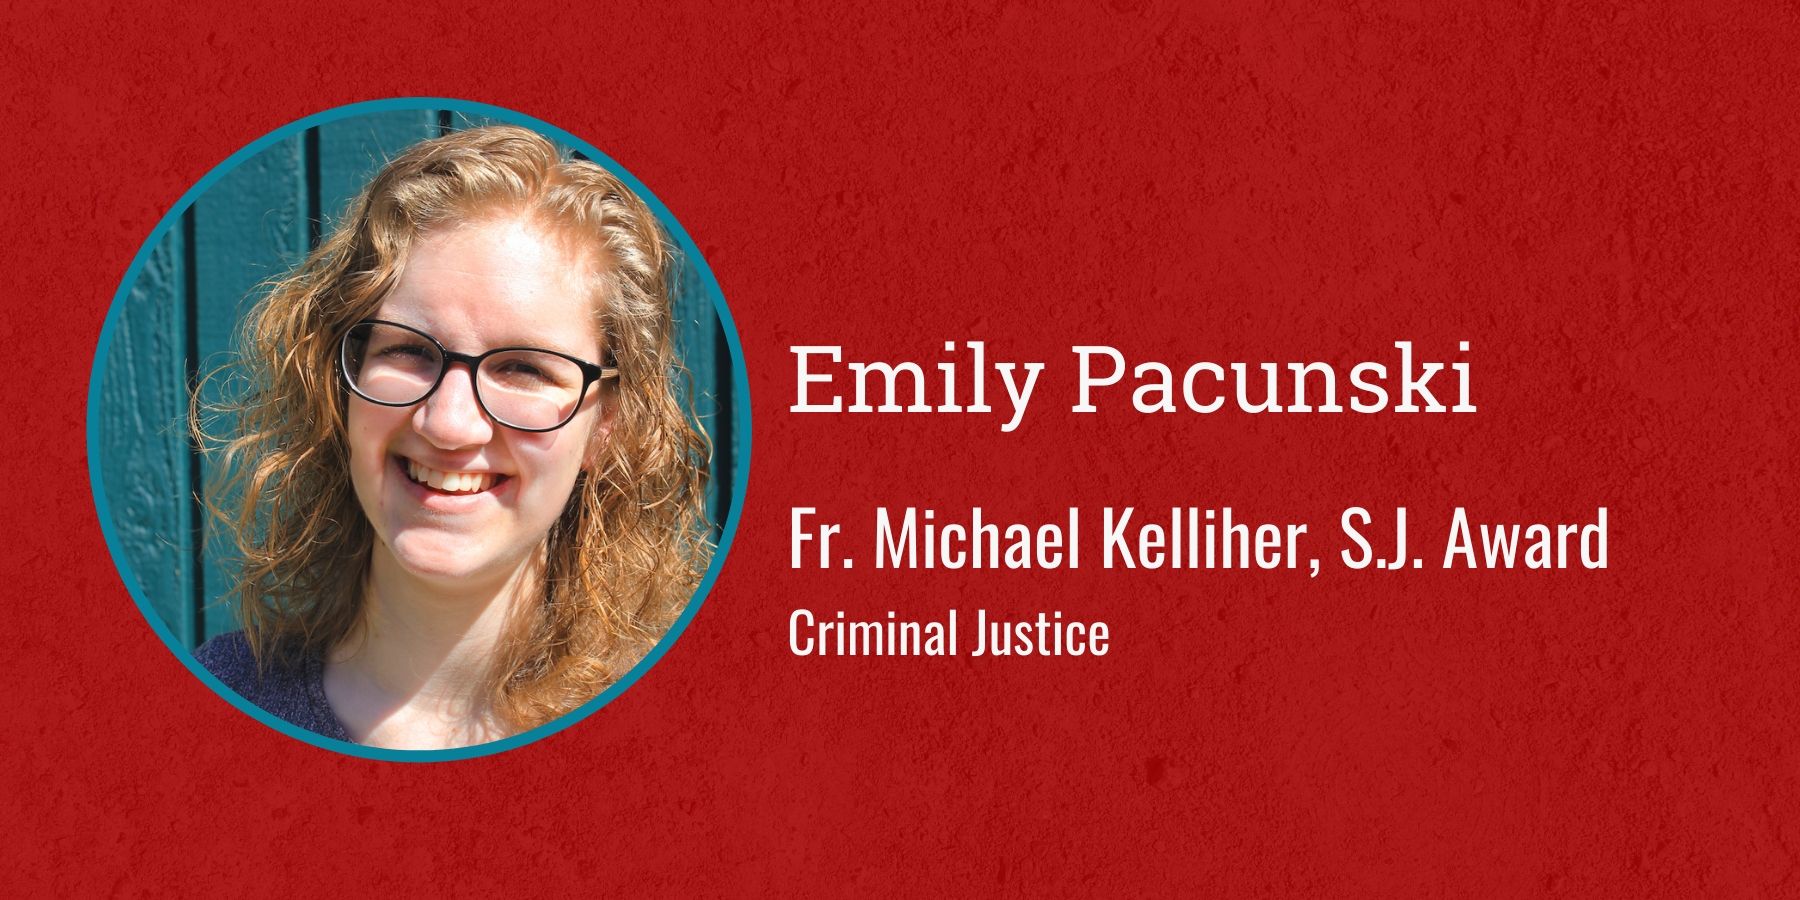 Image of Emily Pacunski and text Fr. Michael Kelliher, S.J. Award, Criminal Justice